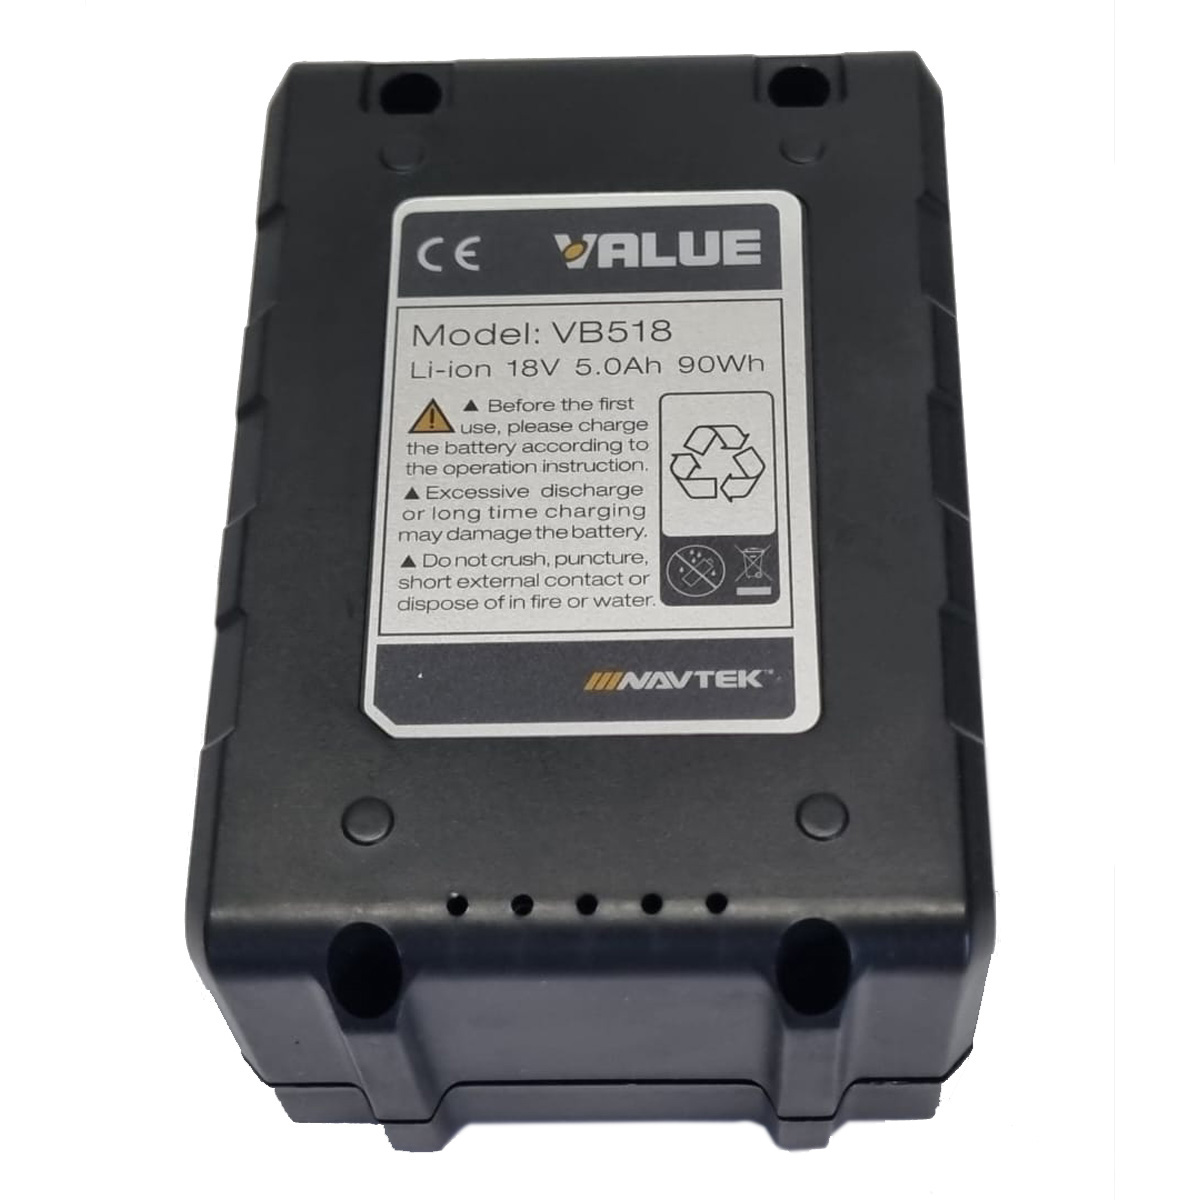 VALUE Batteria al litio di ricambio 5 Ah 18 V - per pompa vuoto a batteria mod. VRP-2DLi - Foto 5